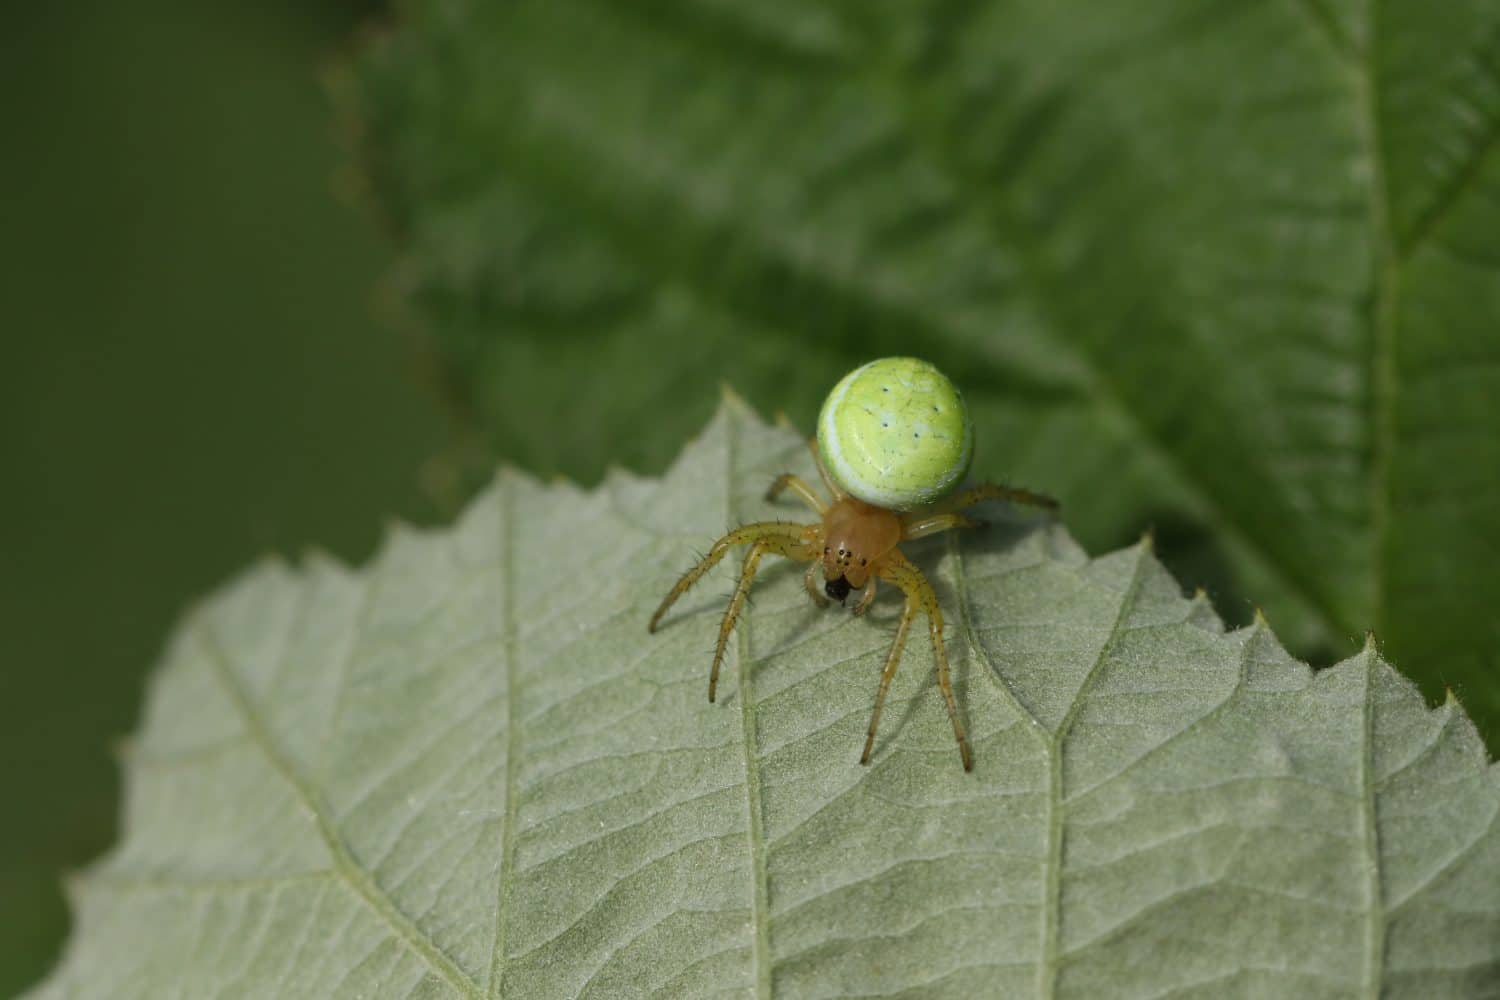 A hunting Cucumber Green Orb Spider, Araniella cucurbitina sensu stricto, hiding on the underside of a leaf.